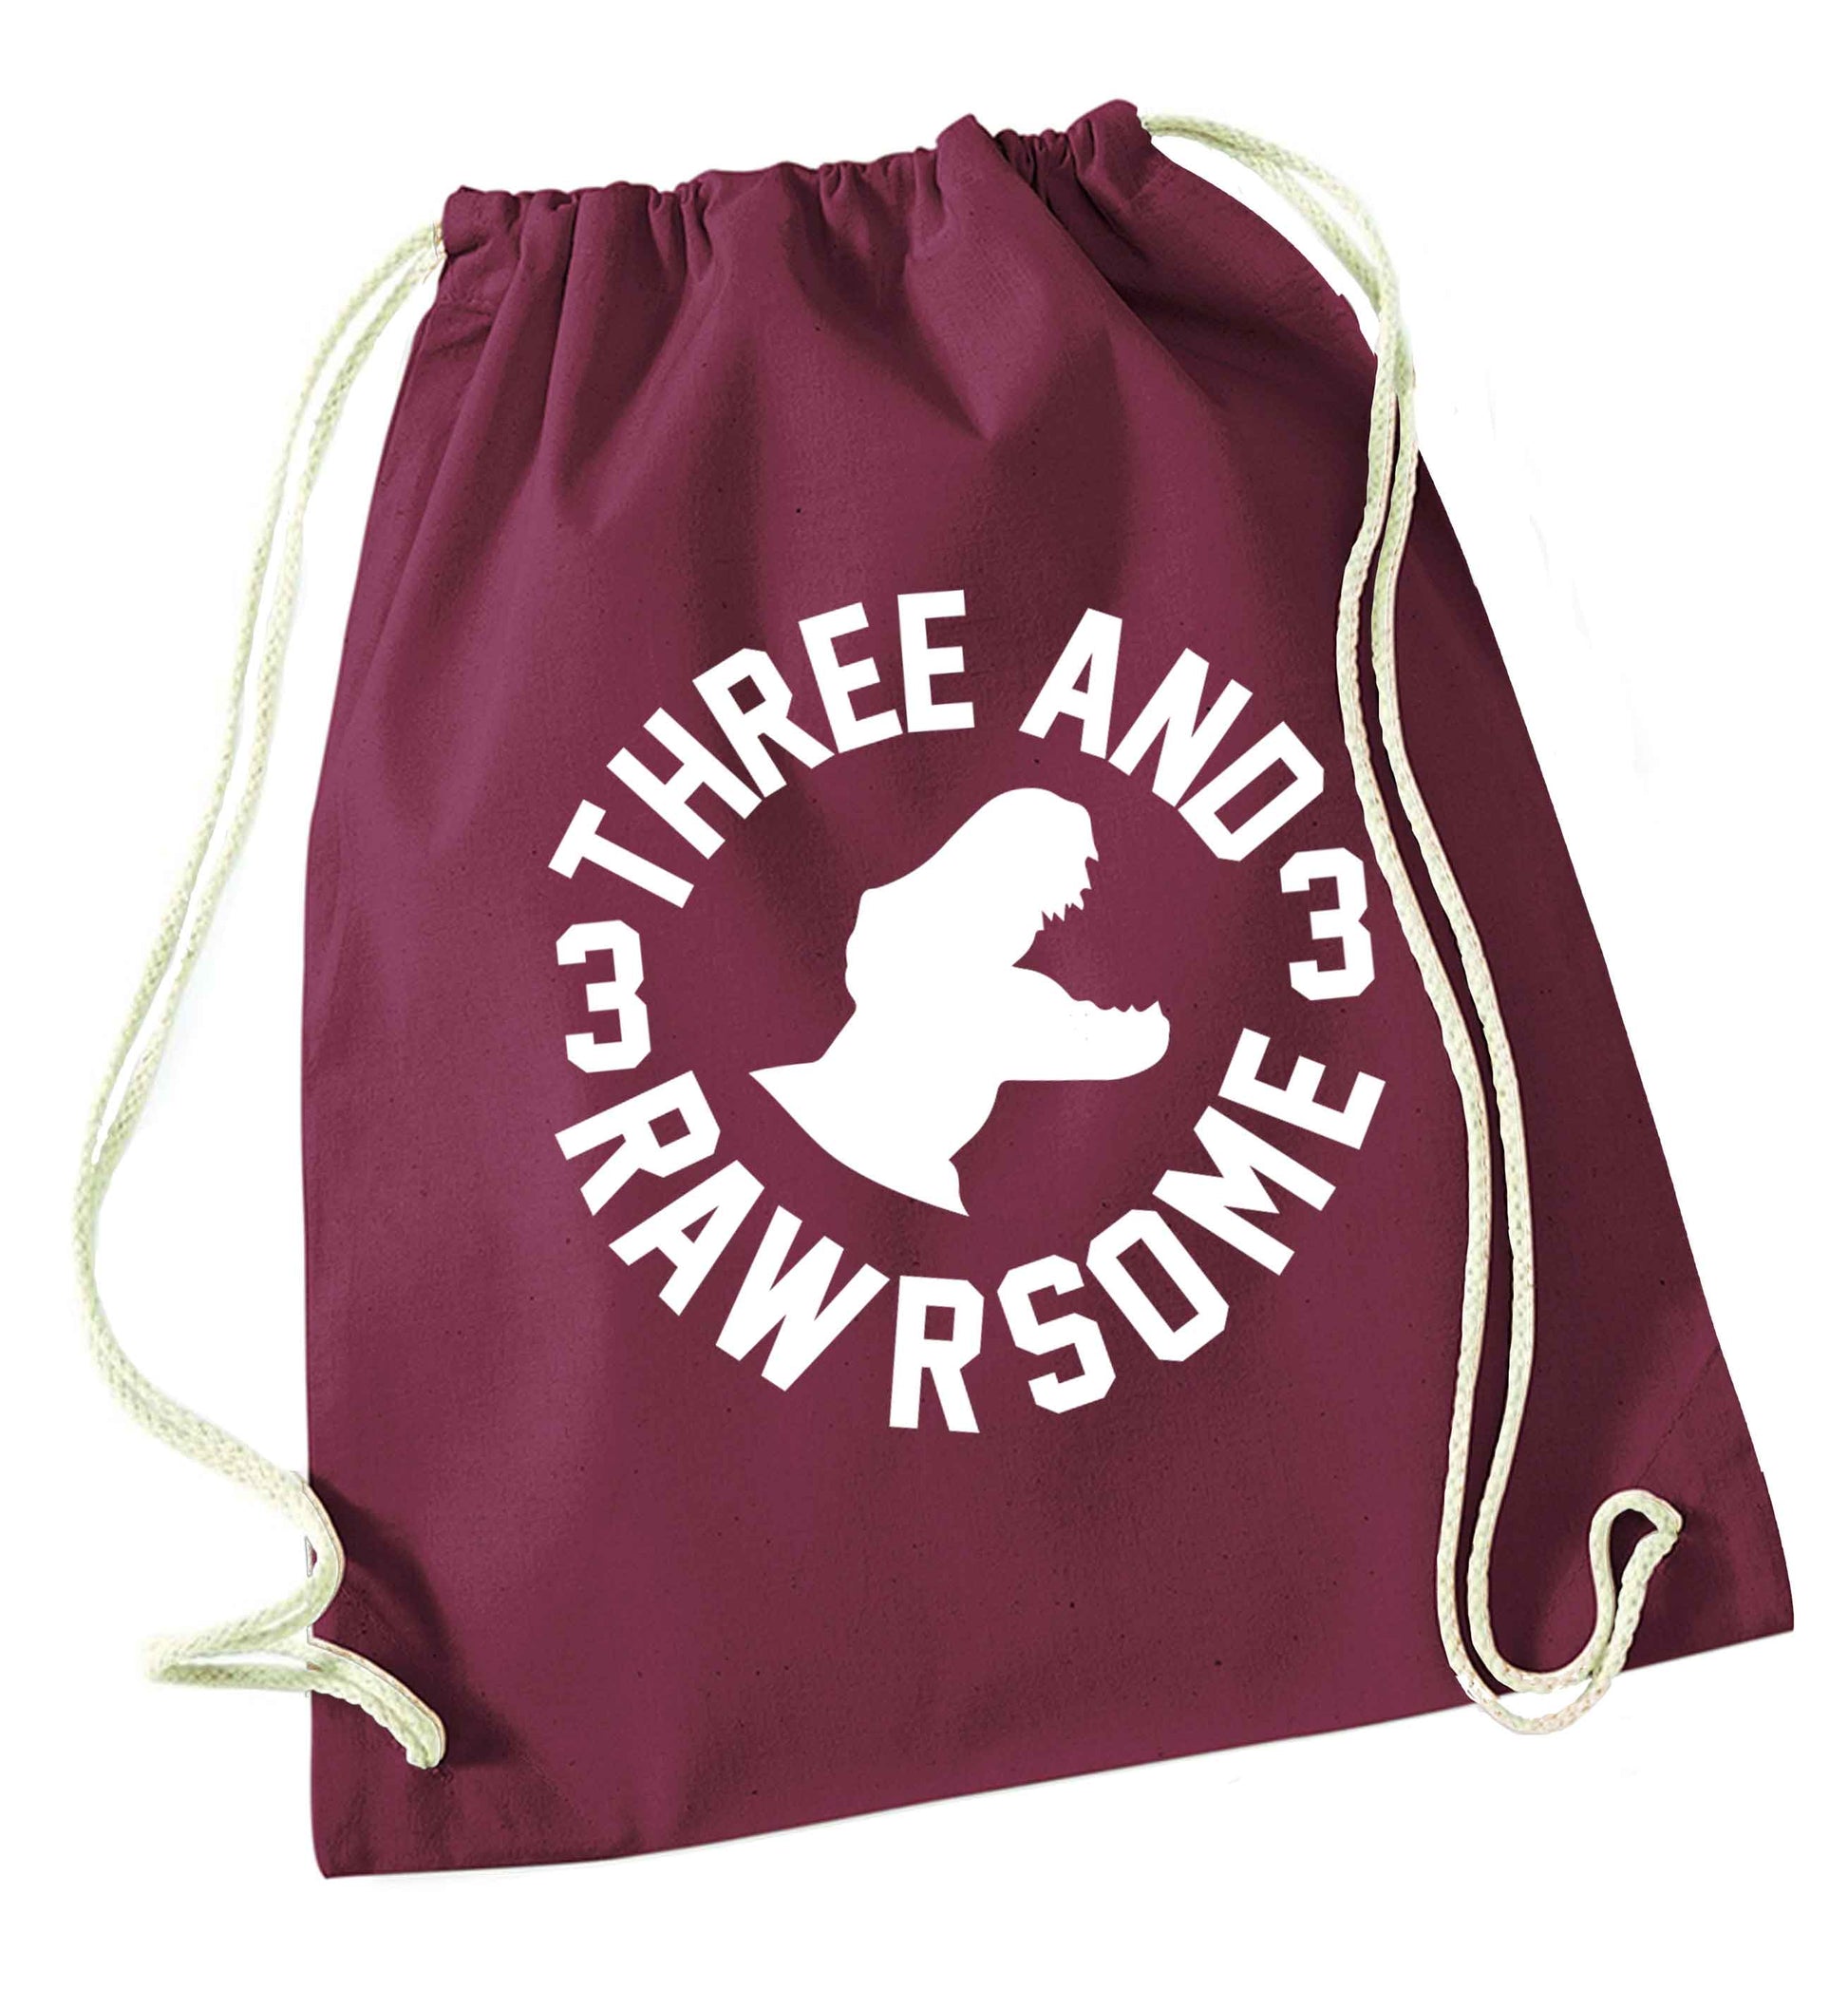 Three and rawrsome maroon drawstring bag